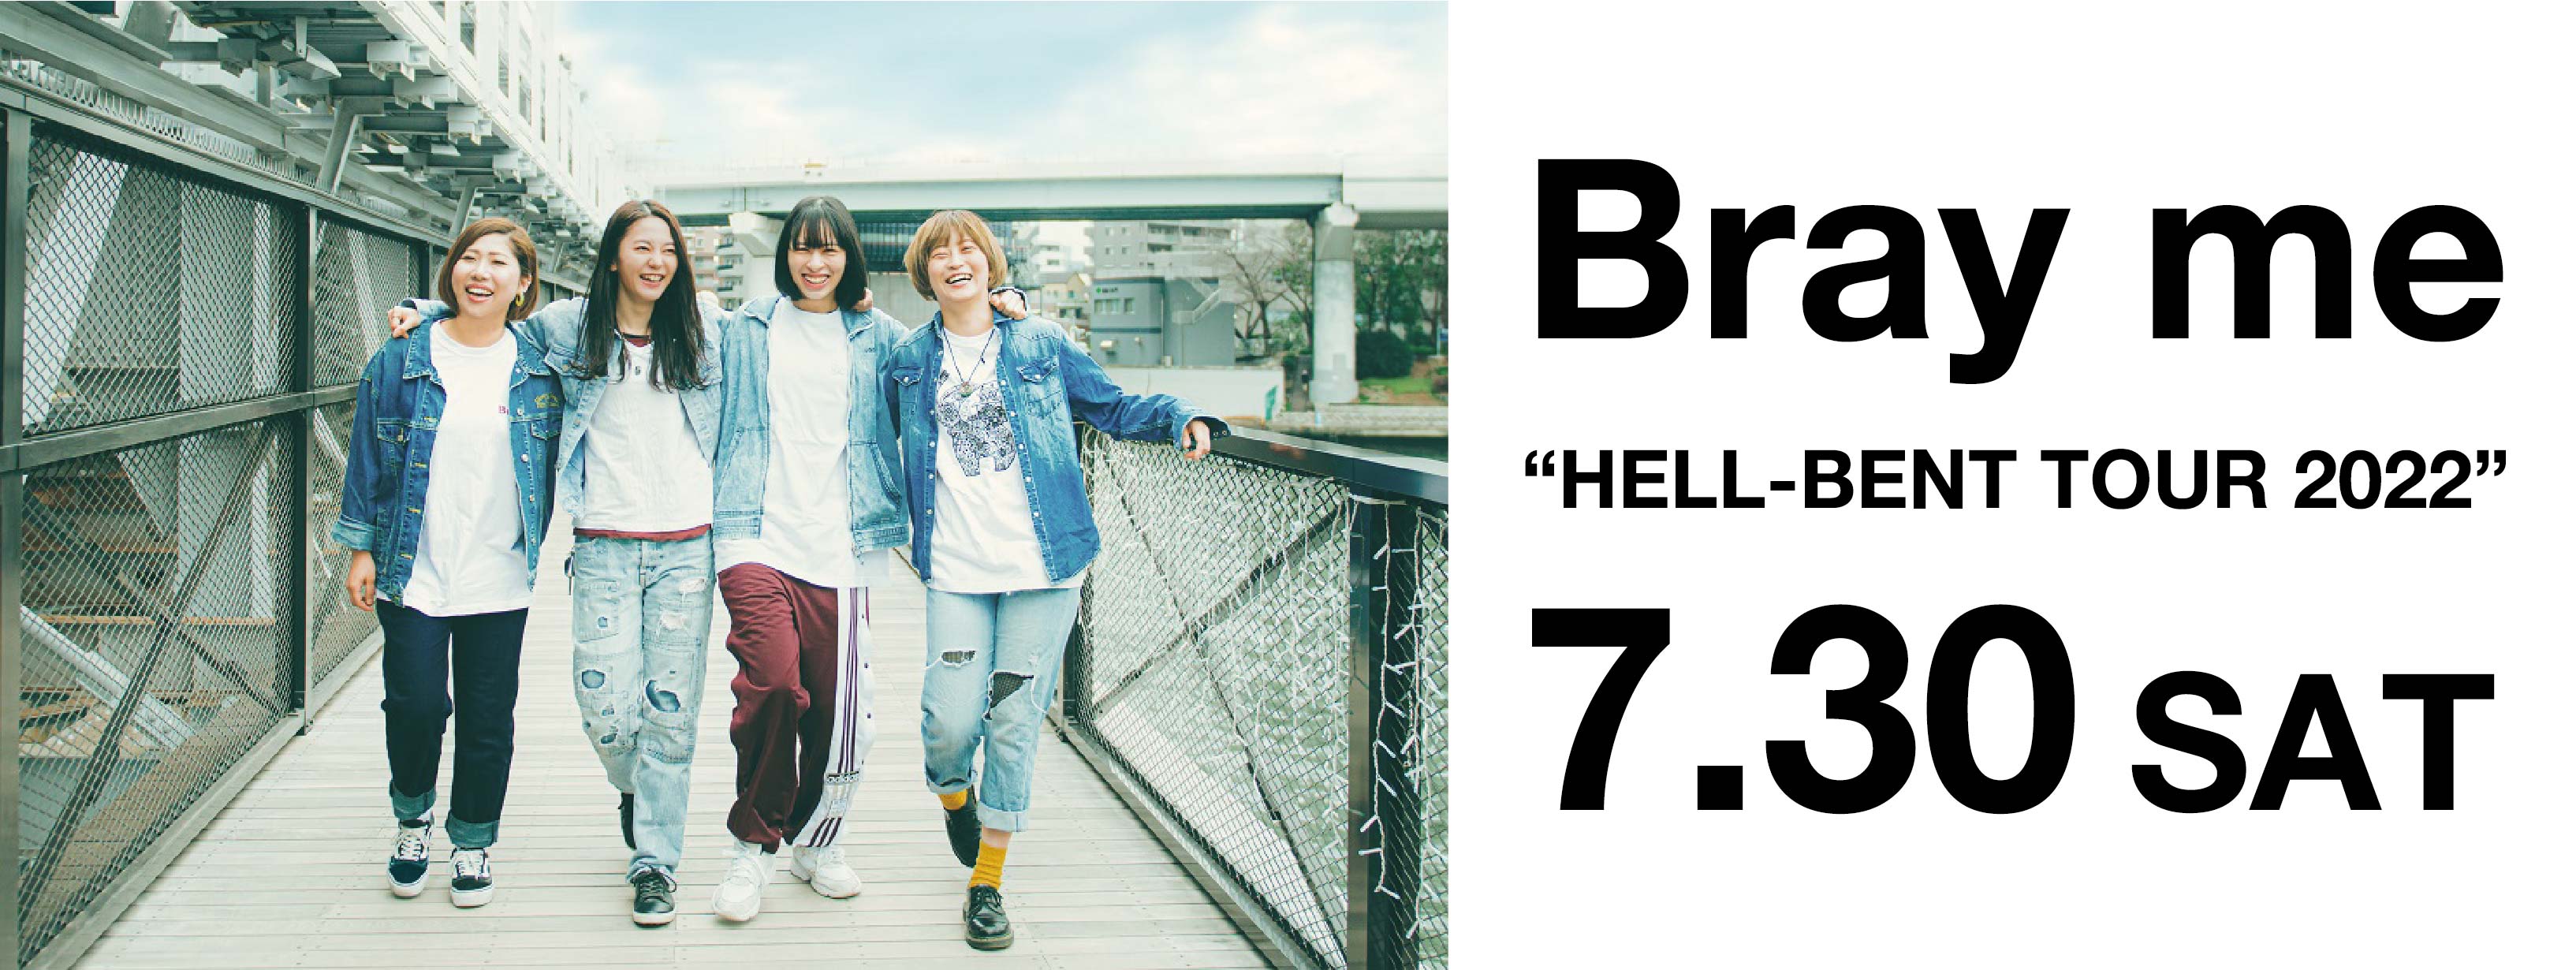 Bray me “HELL-BENT TOUR 2022”